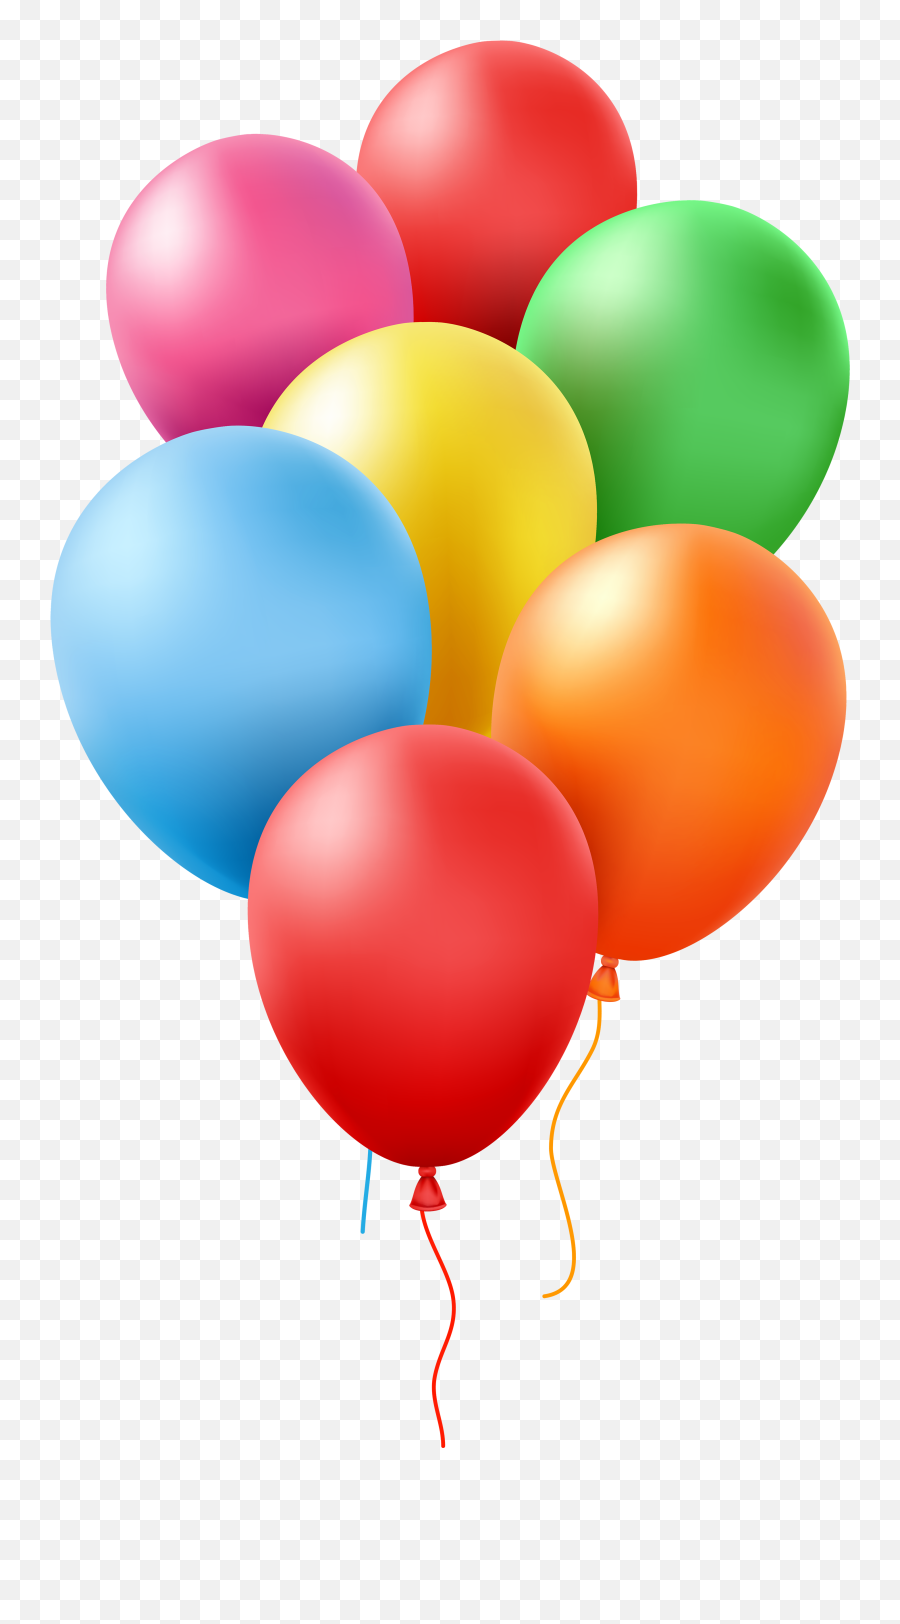 Balloons Transparent Clip Art Image - Balloons Clipart Transparent Png,Balloons Transparent